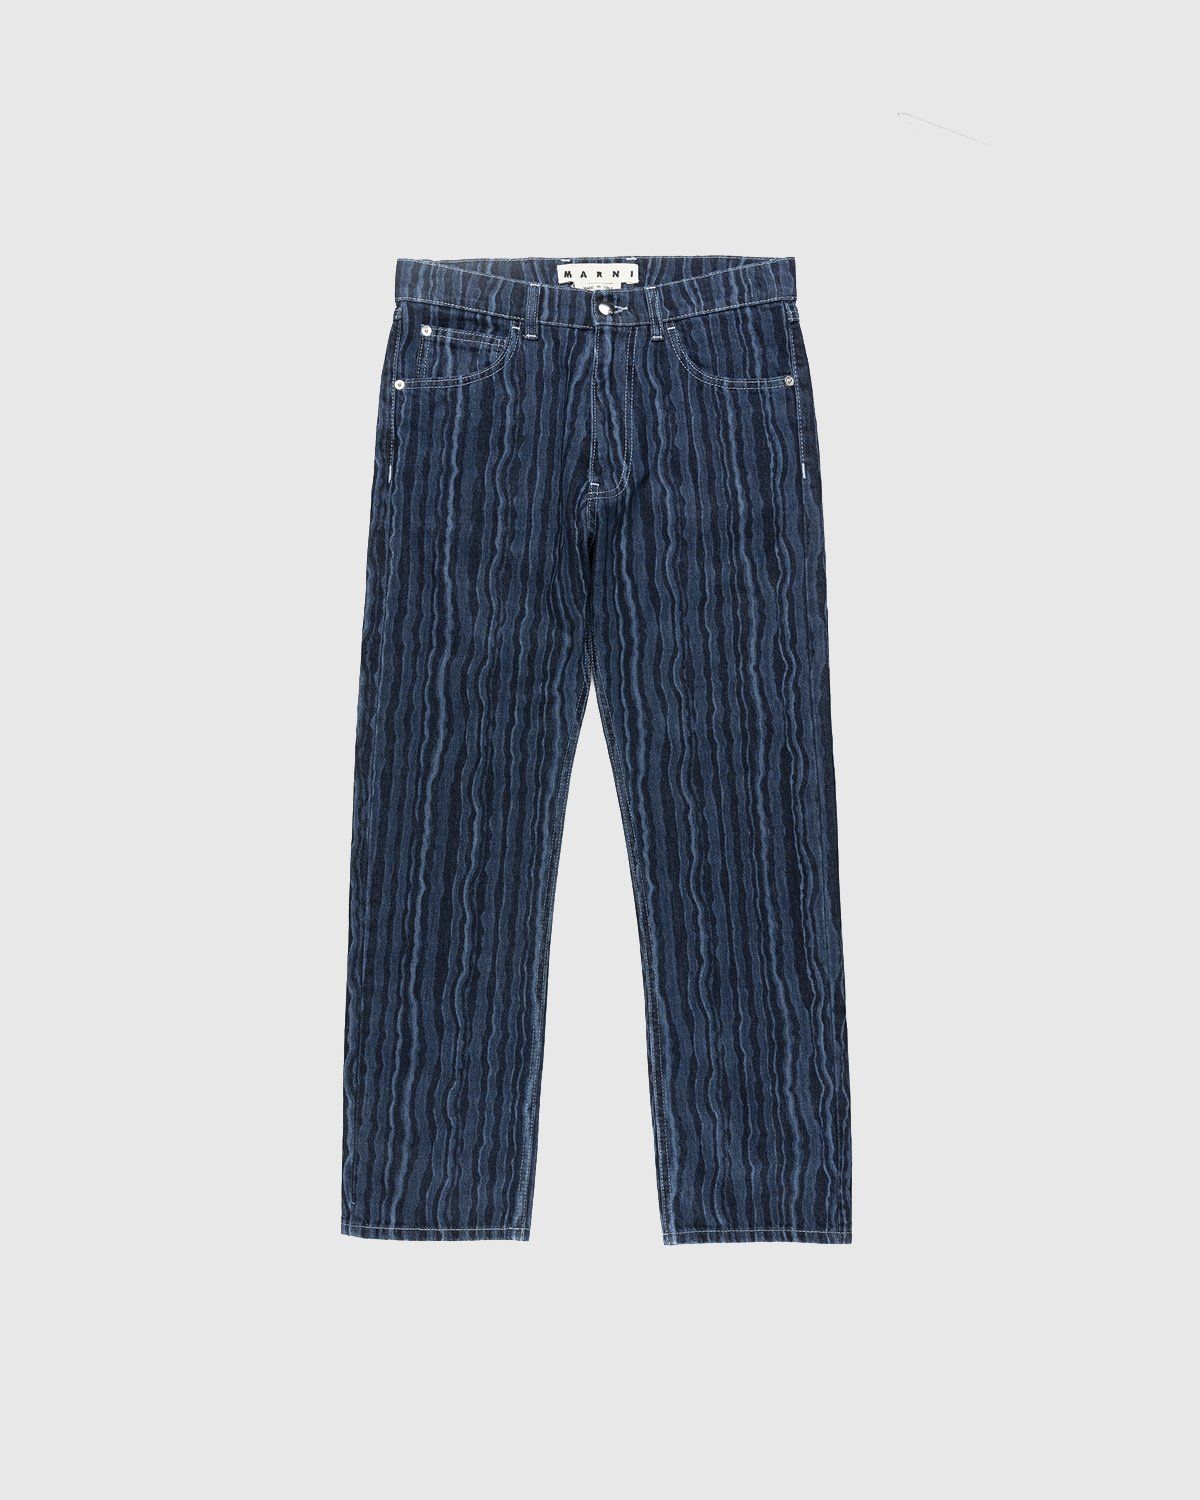 Marni – Abstract Print Wide Leg Jeans Blue - Pants - Blue - Image 1